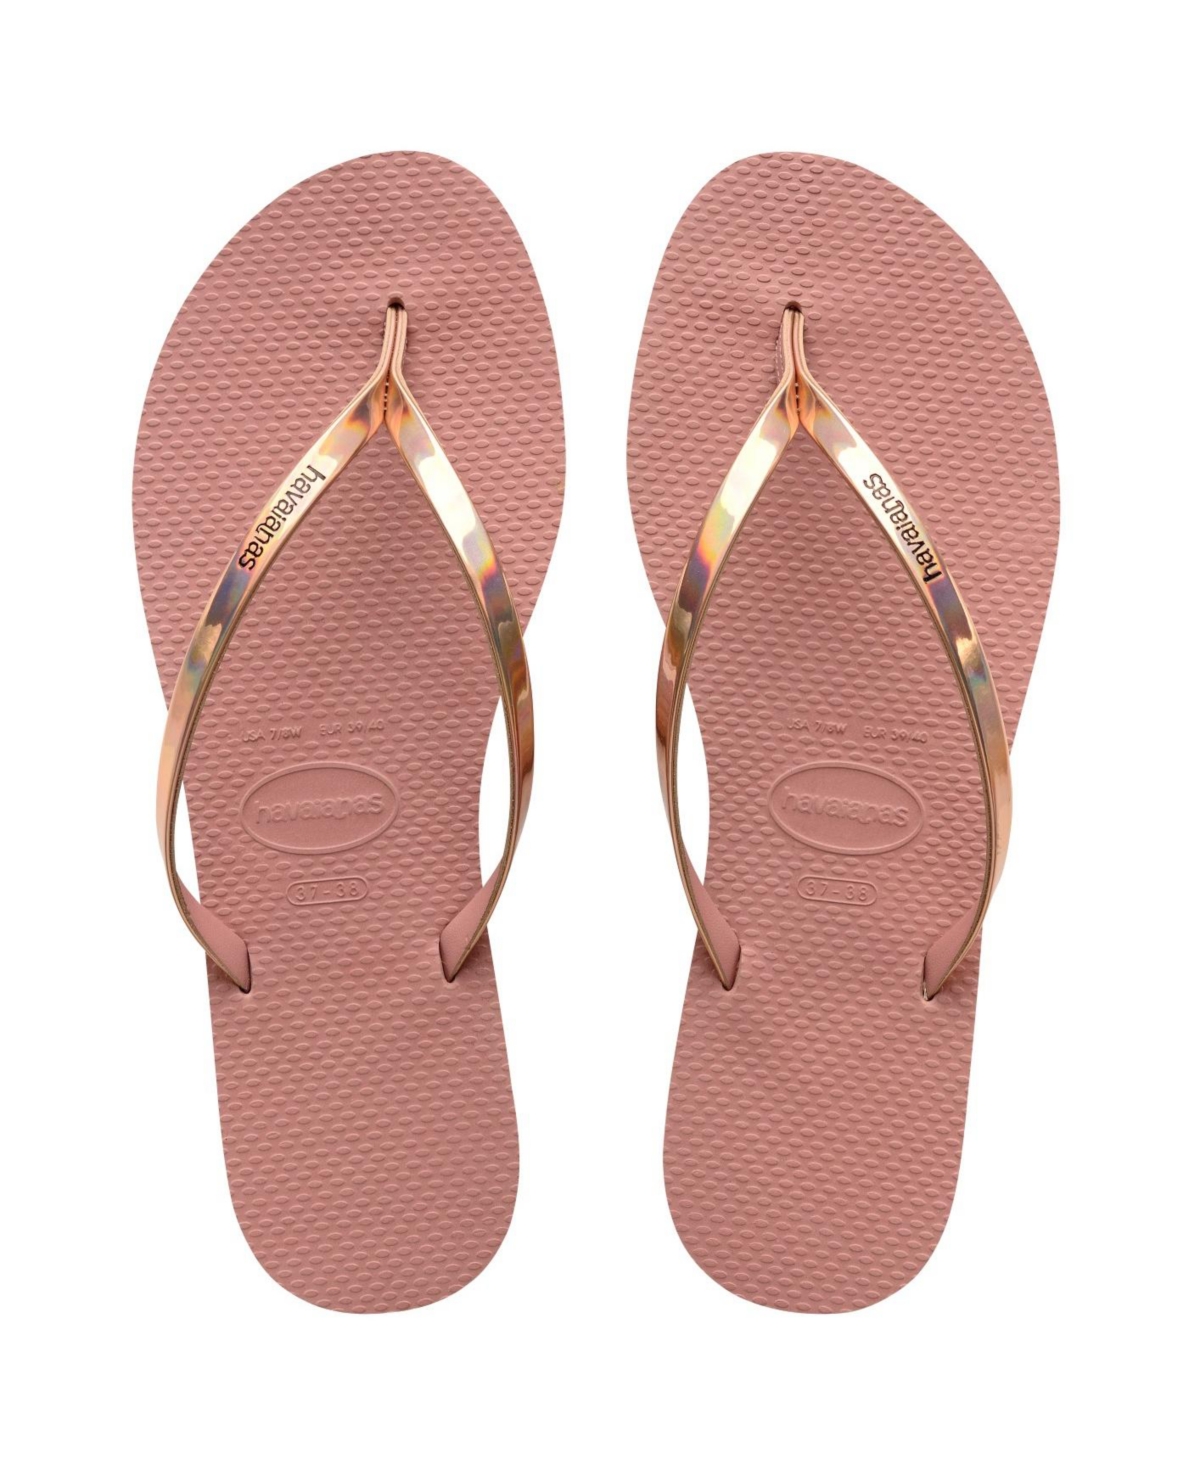 Havaianas Women's You Metallic Flip Flop Sandals Women's Shoes